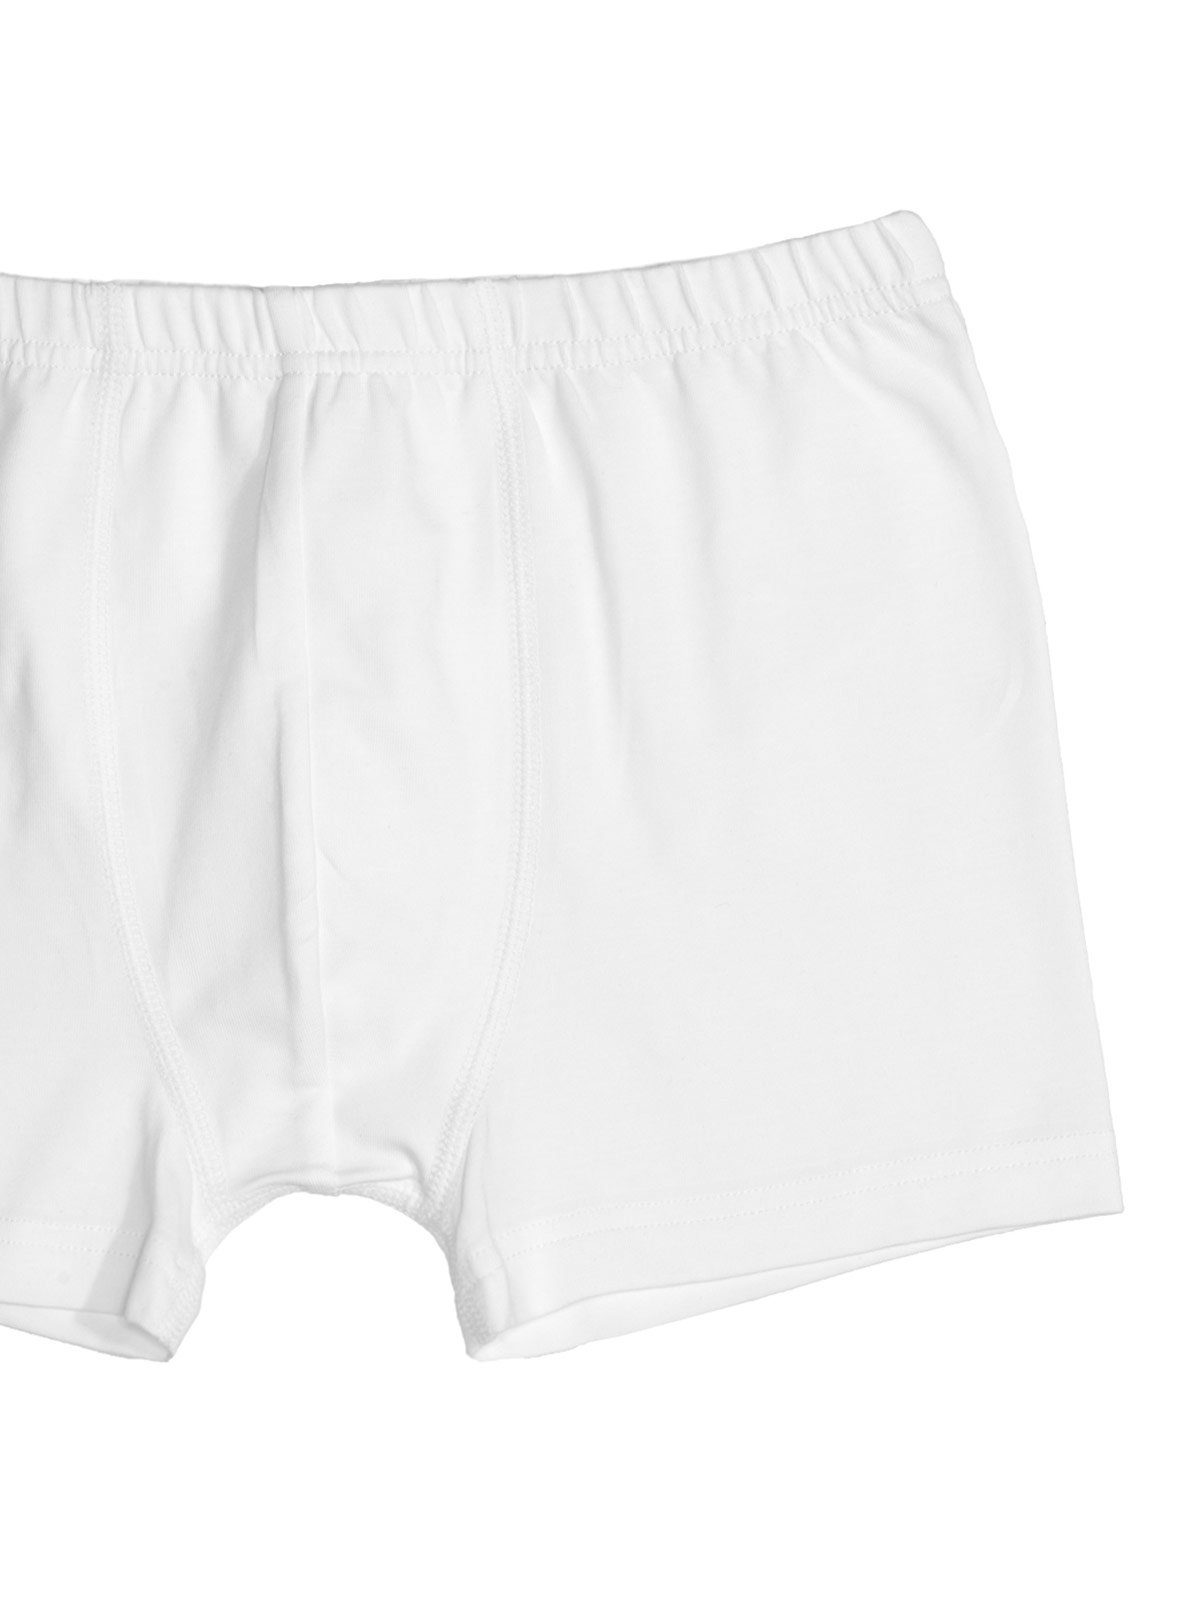 Knaben Jersey Markenqualität Sweety weiss for 1-St) Kids Single Shorts Retro Boxershorts hohe (Stück,